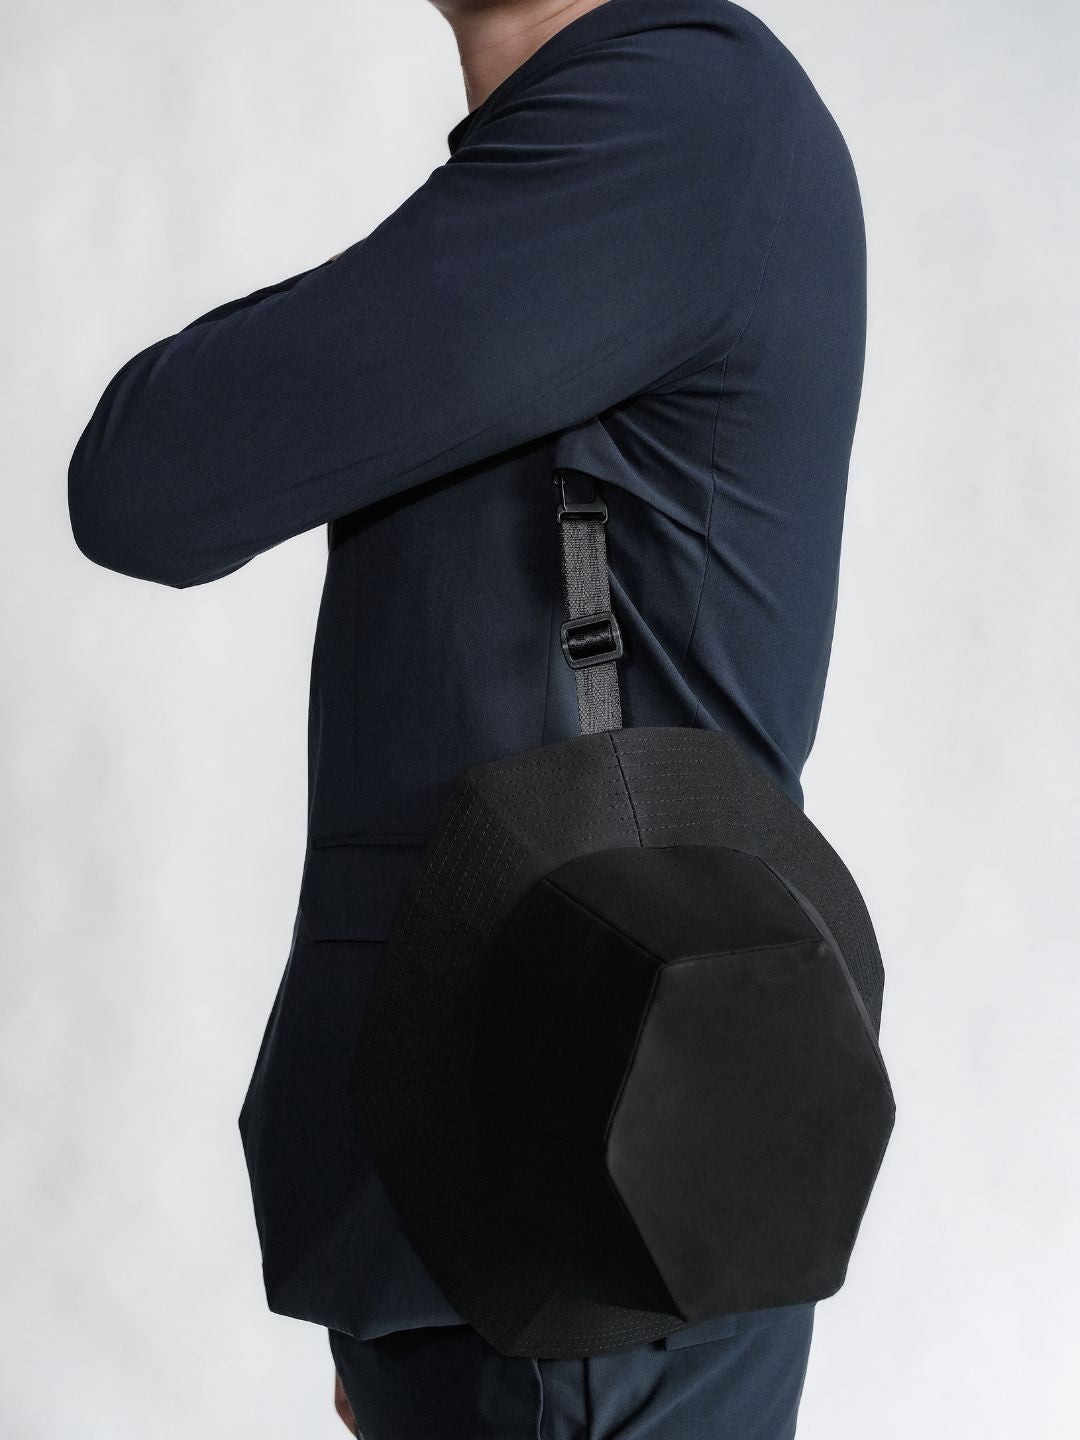 Ultra Suit 3.0 單排扣套裝組合 午夜藍 + M-system - TRANZEND